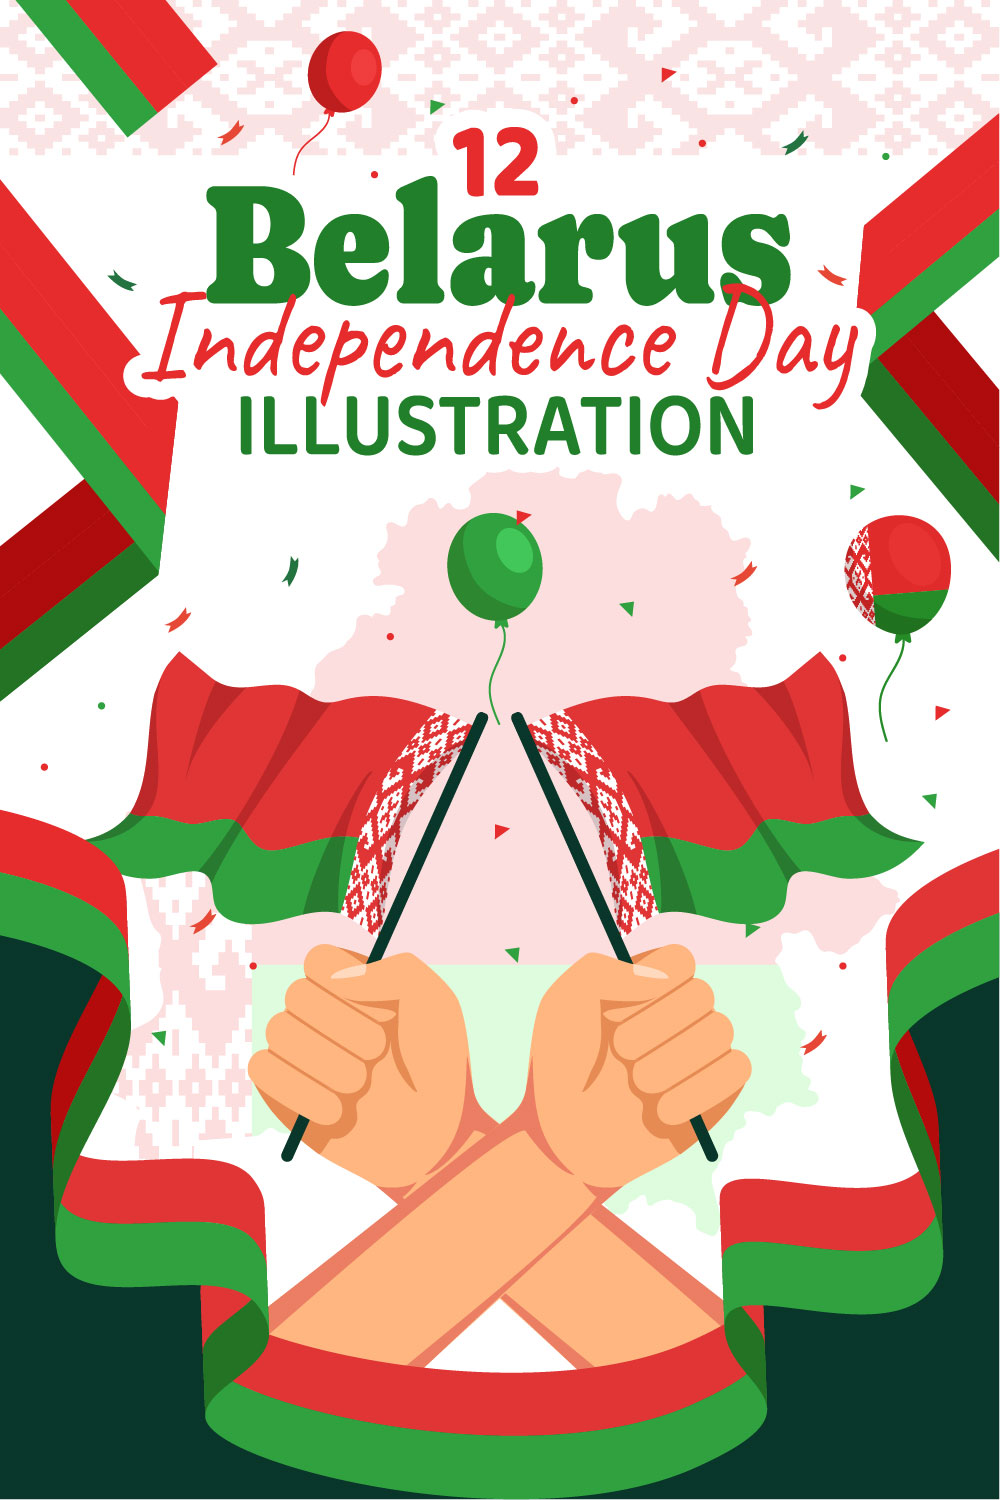 12 Belarus Independence Day Illustration pinterest preview image.